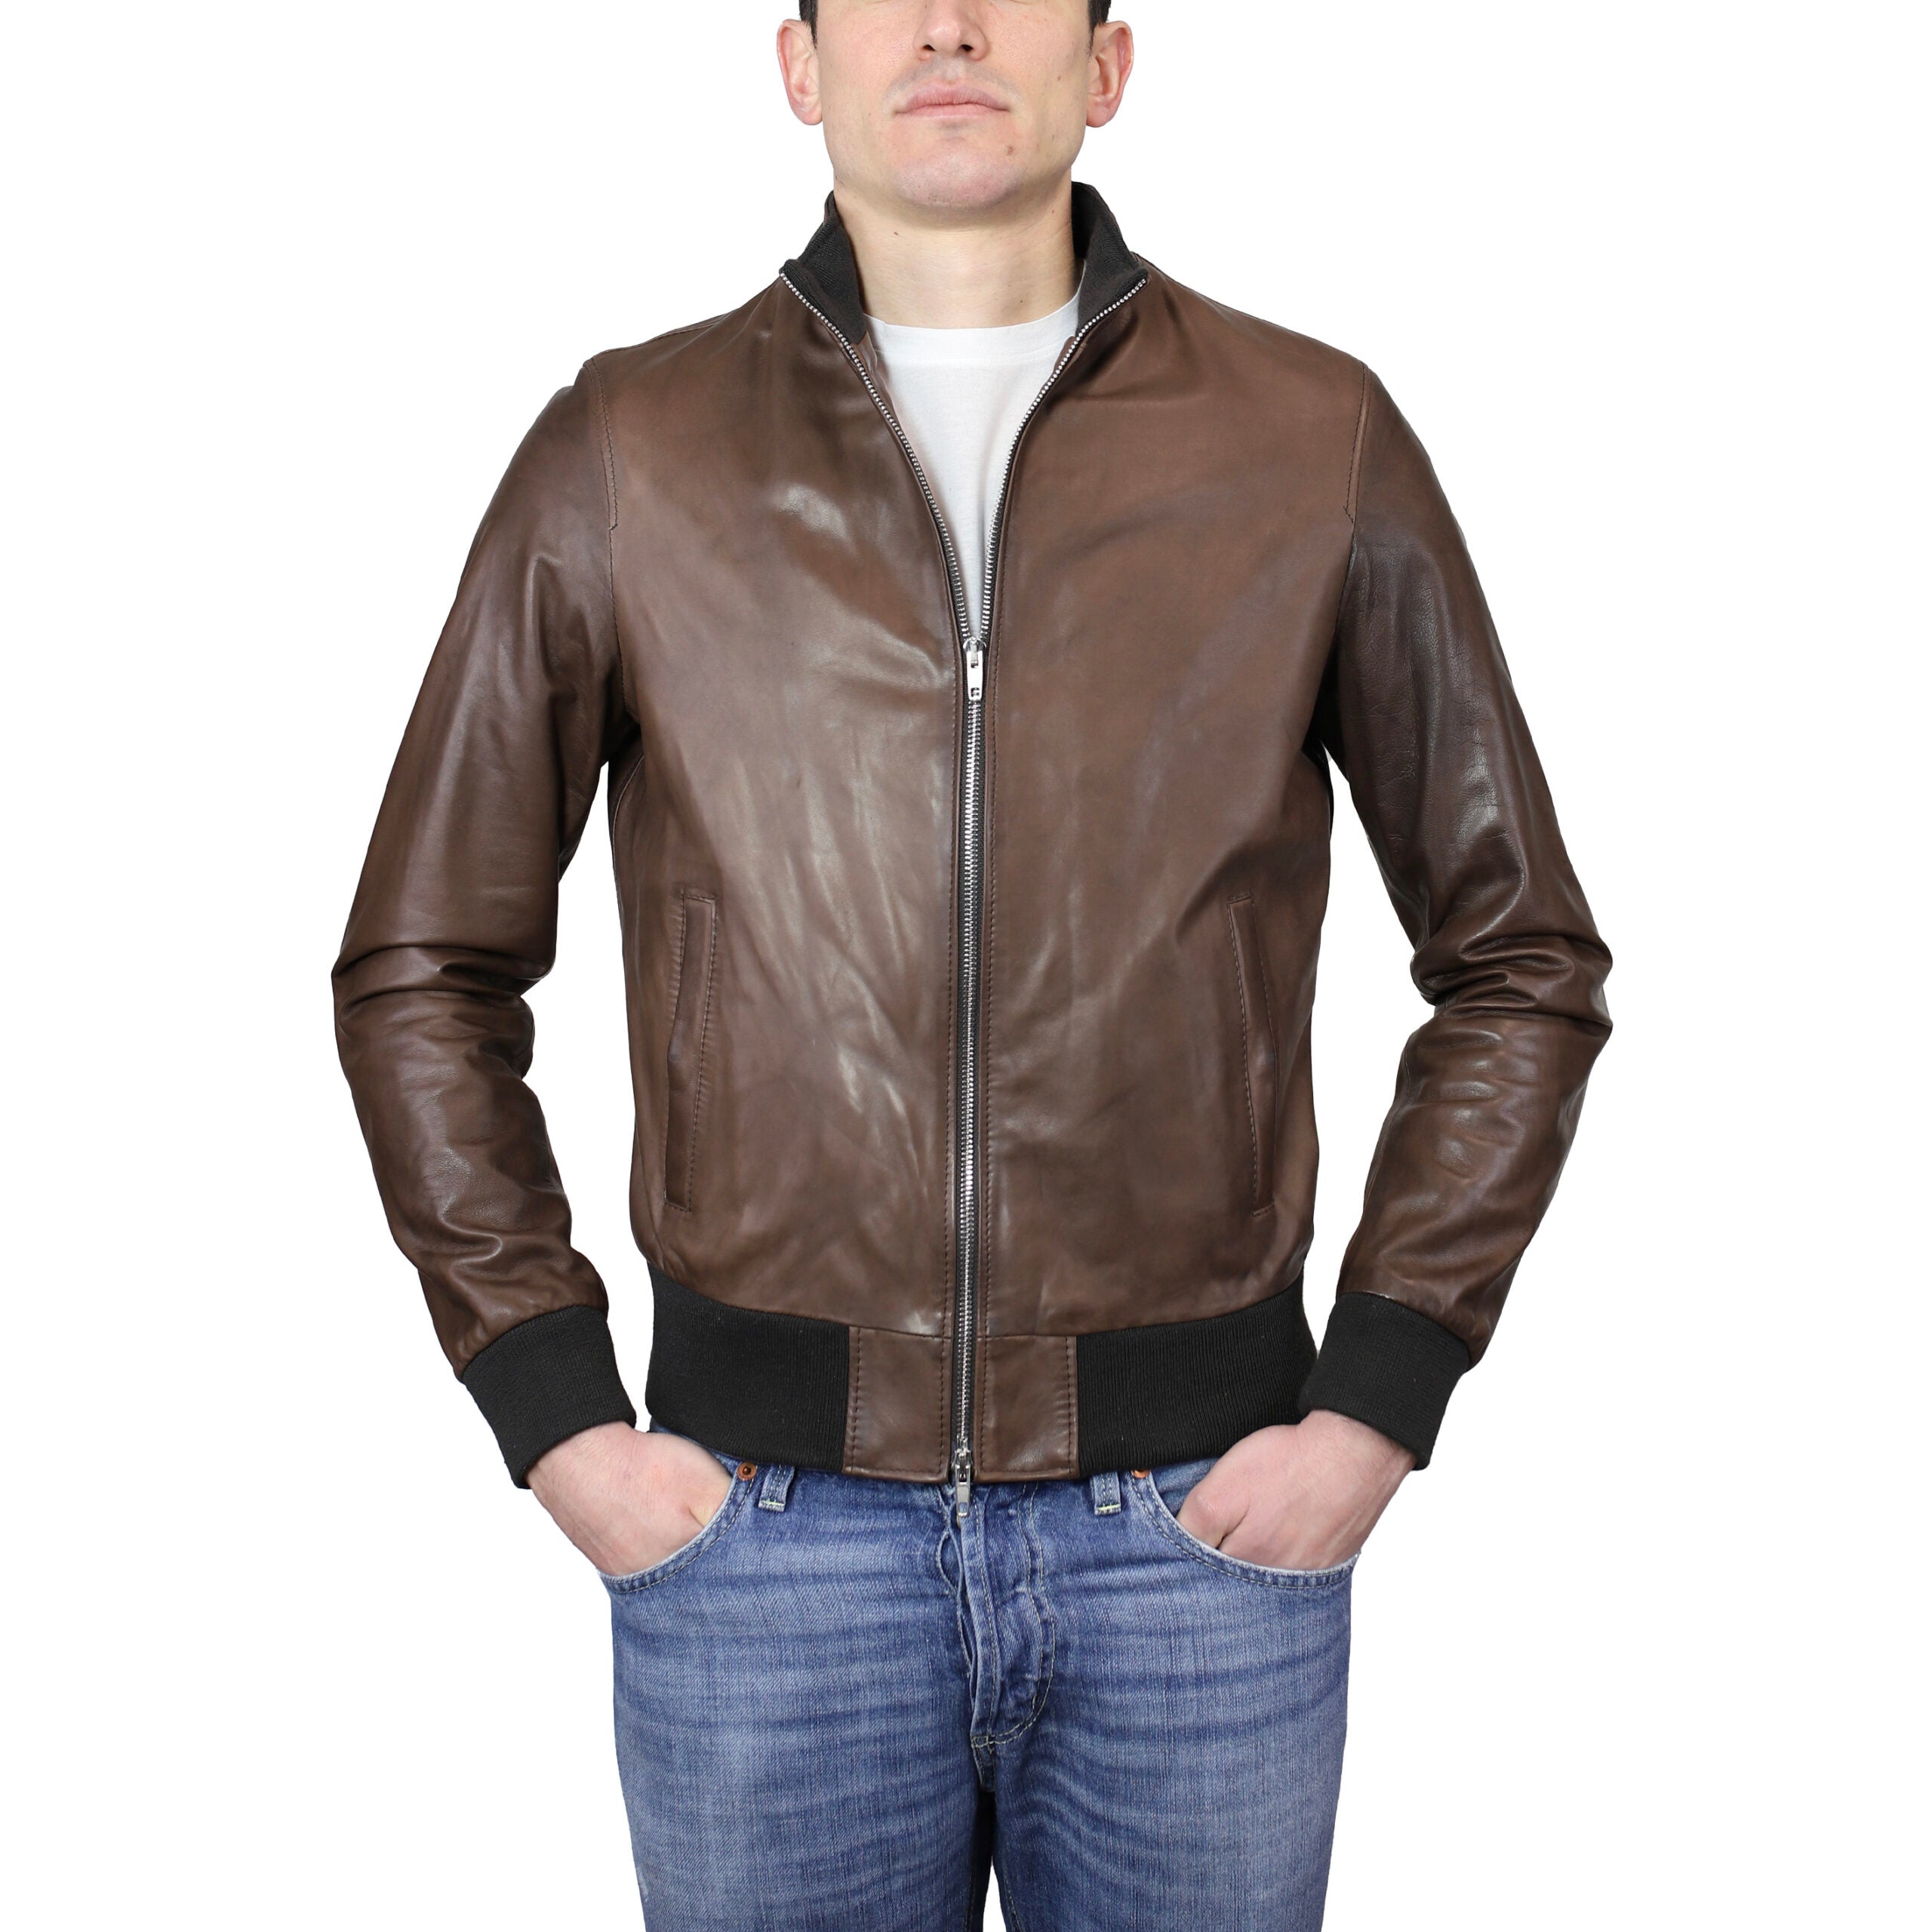 91PNACI leather jacket